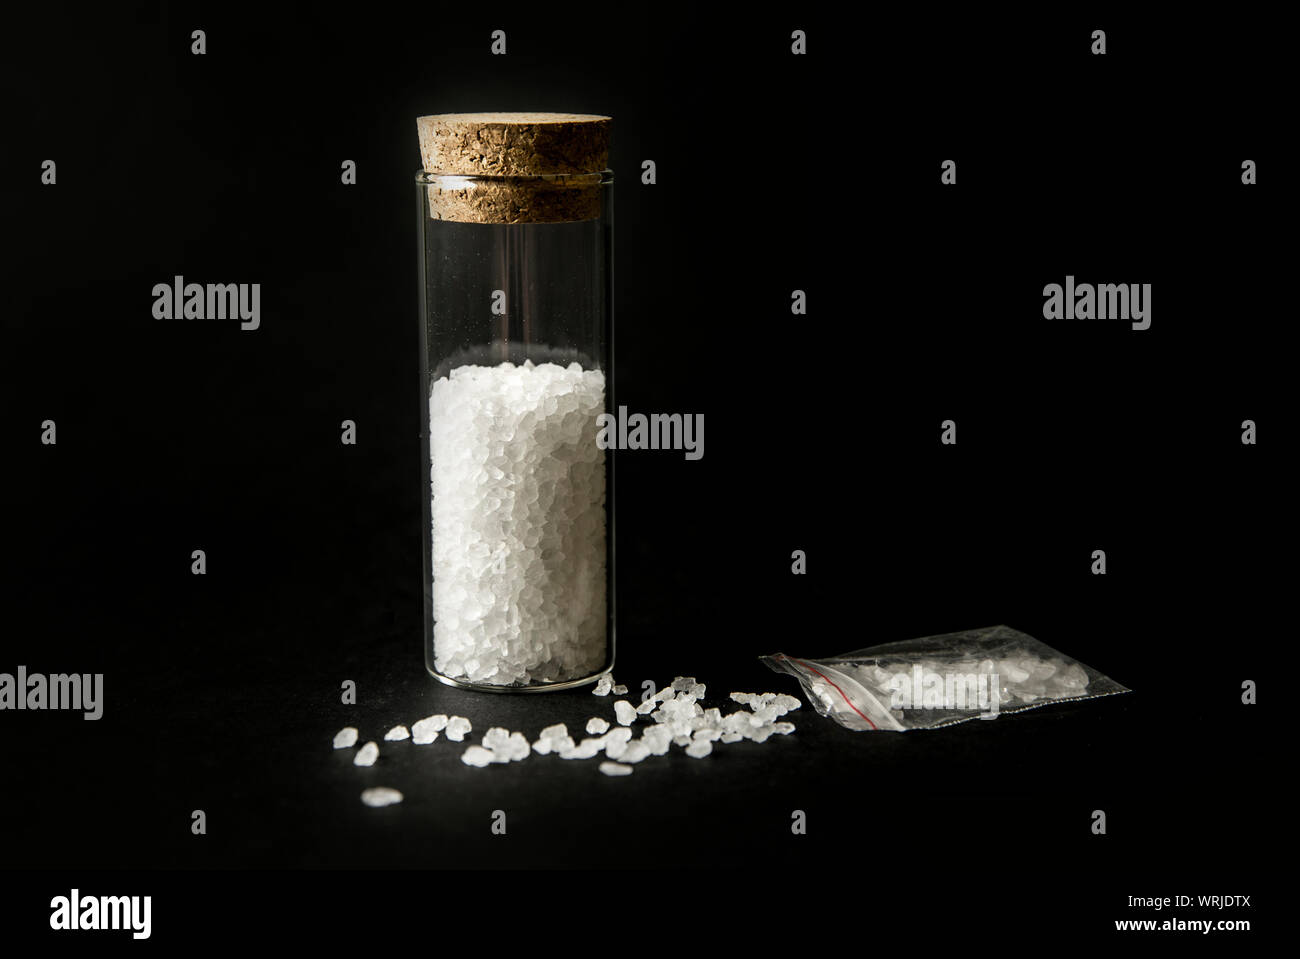 Conceptual image of 'bath salts' drugs narcotics concept. White crystal powder on black background( set up), resemble to bathroom bath salt. Stock Photo